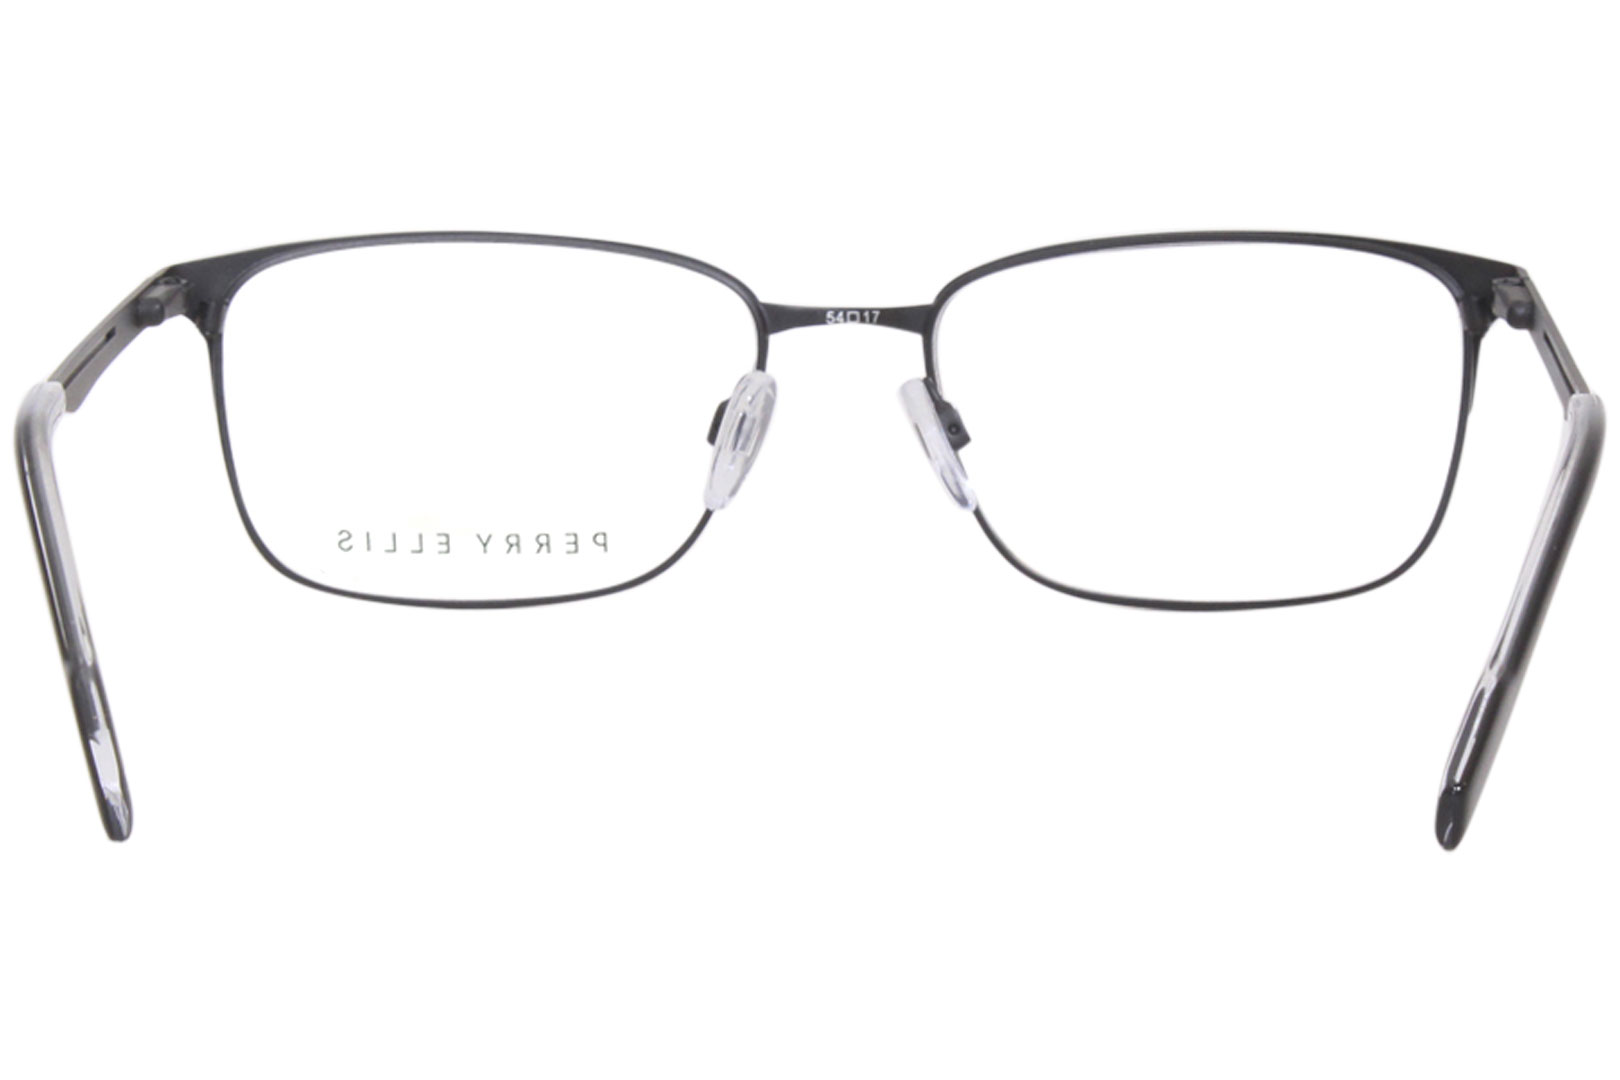 Perry Ellis PE440 Eyeglasses Men's Full Rim Rectangular Optical Frame ...